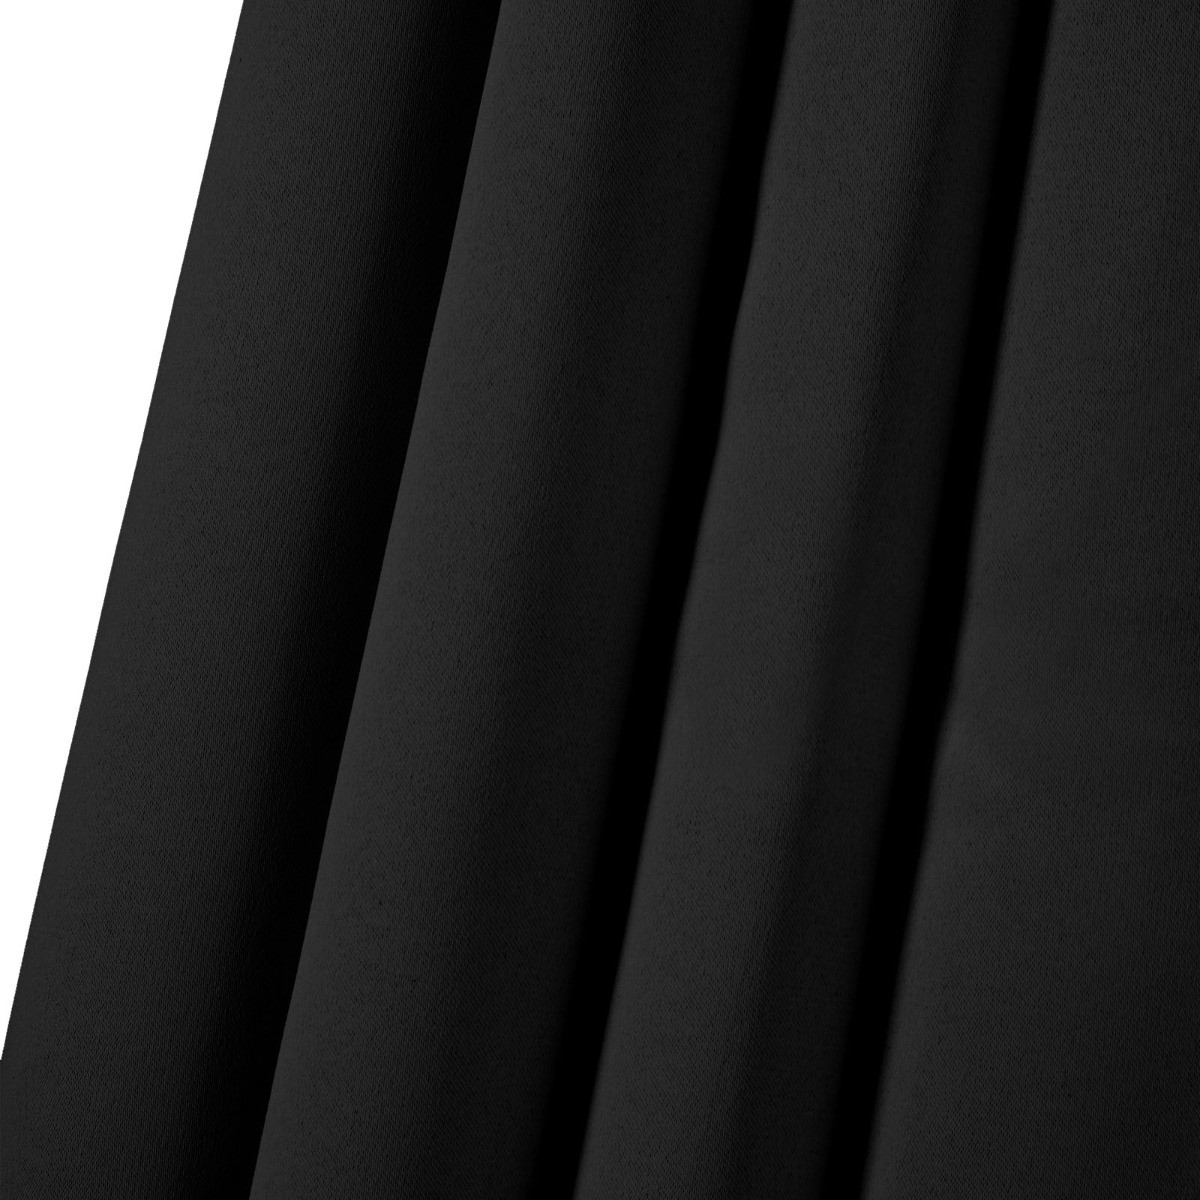 Dreamscene Eyelet Blackout Curtains - Black, 90" X 54">